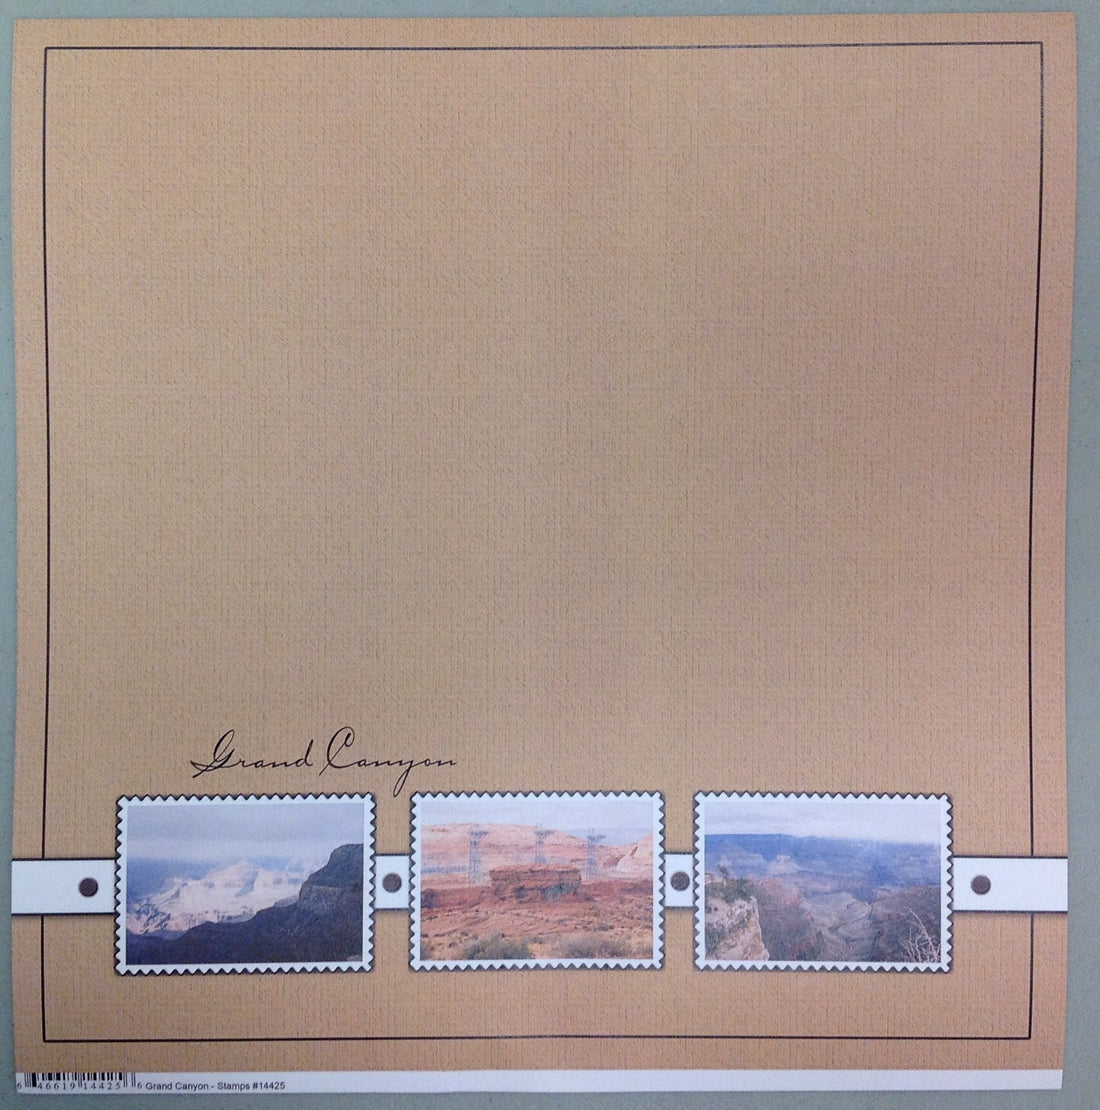 NevGrand Canyon Arizona Stamps Scrapbook Paper @scrapbooksrus